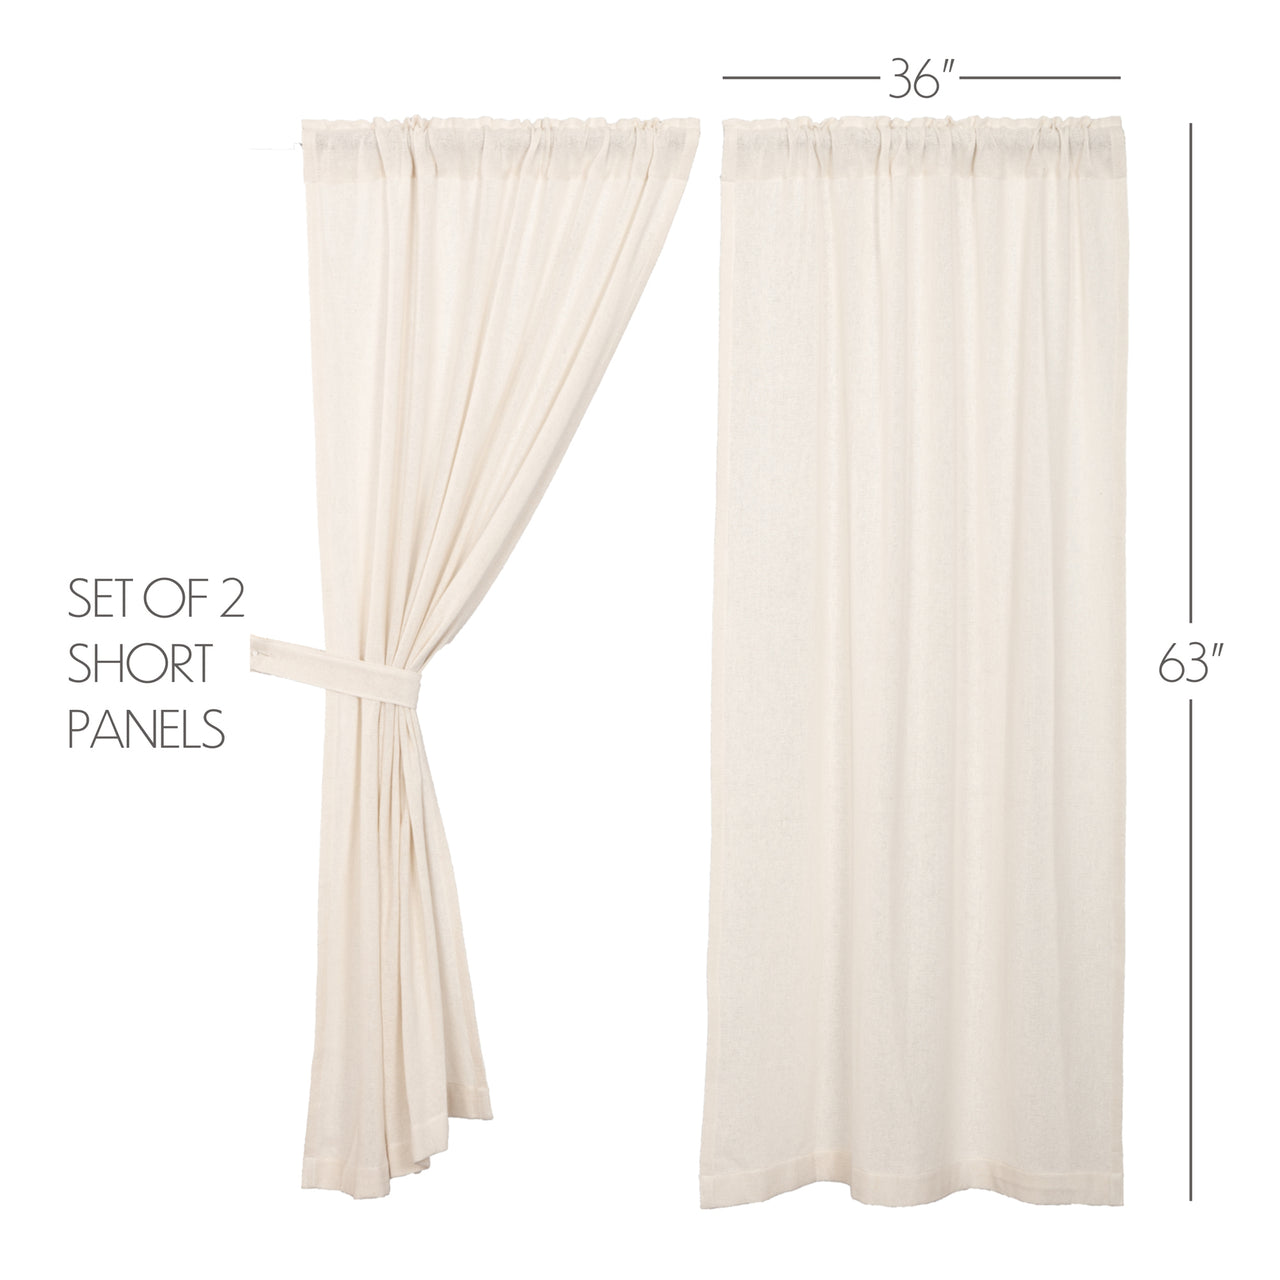 Burlap Antique White Short Panel Curtain Set of 2 63"x36" VHC Brands